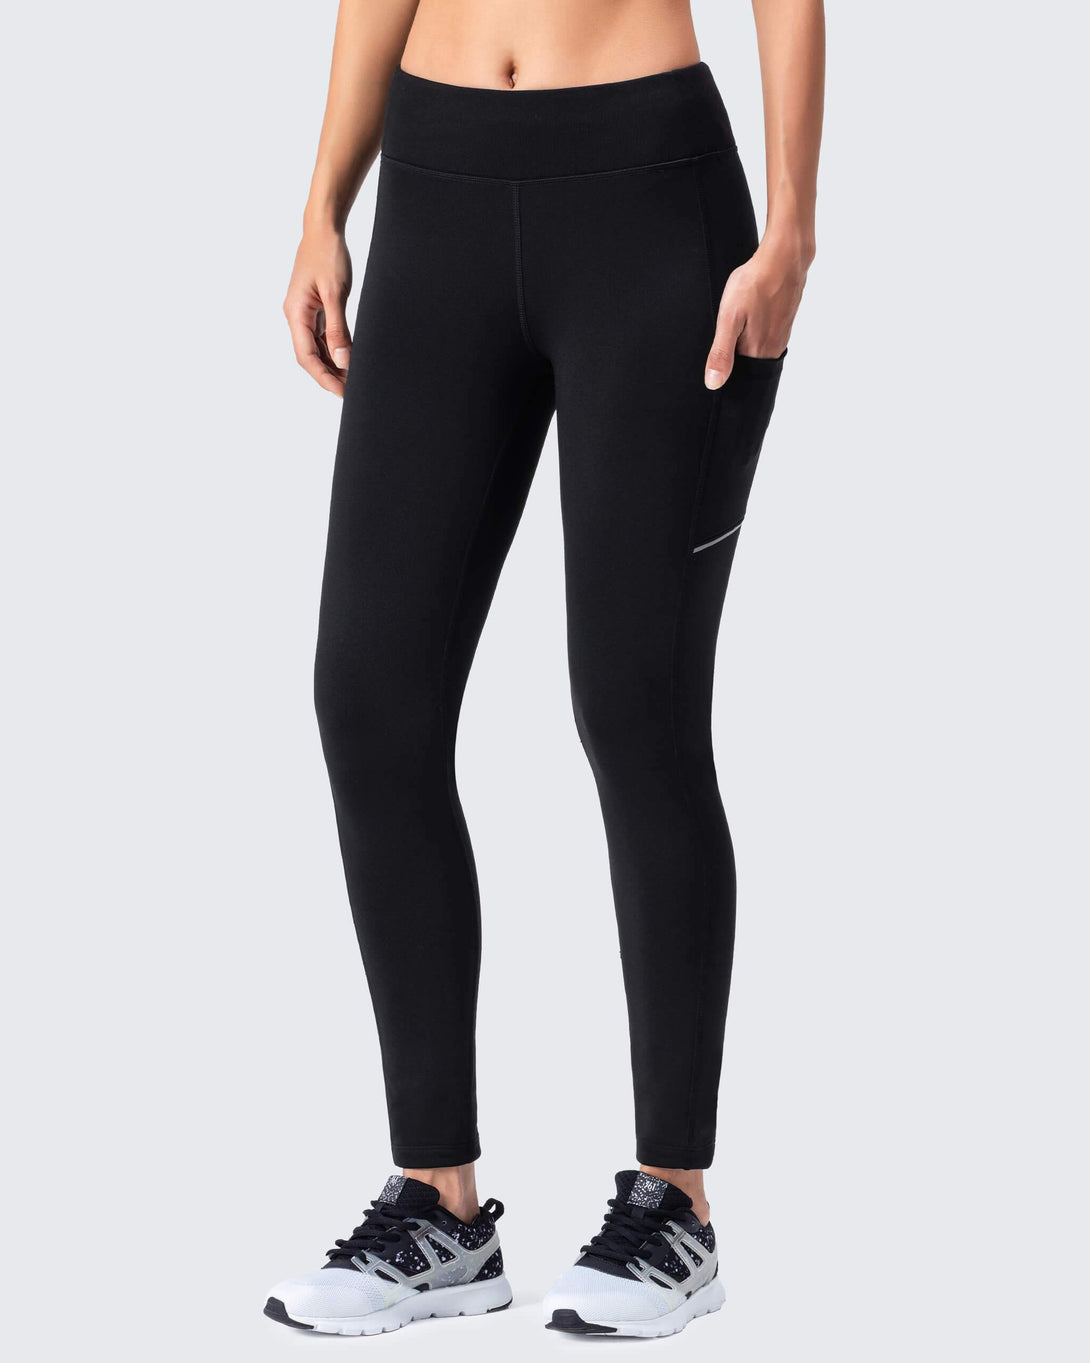 NAVISKIN Women's Fleece Thermal Sweat Pants Open Bottom Running Yoga Home Workout  Pants Side Pocket Black Size S : : Clothing, Shoes & Accessories